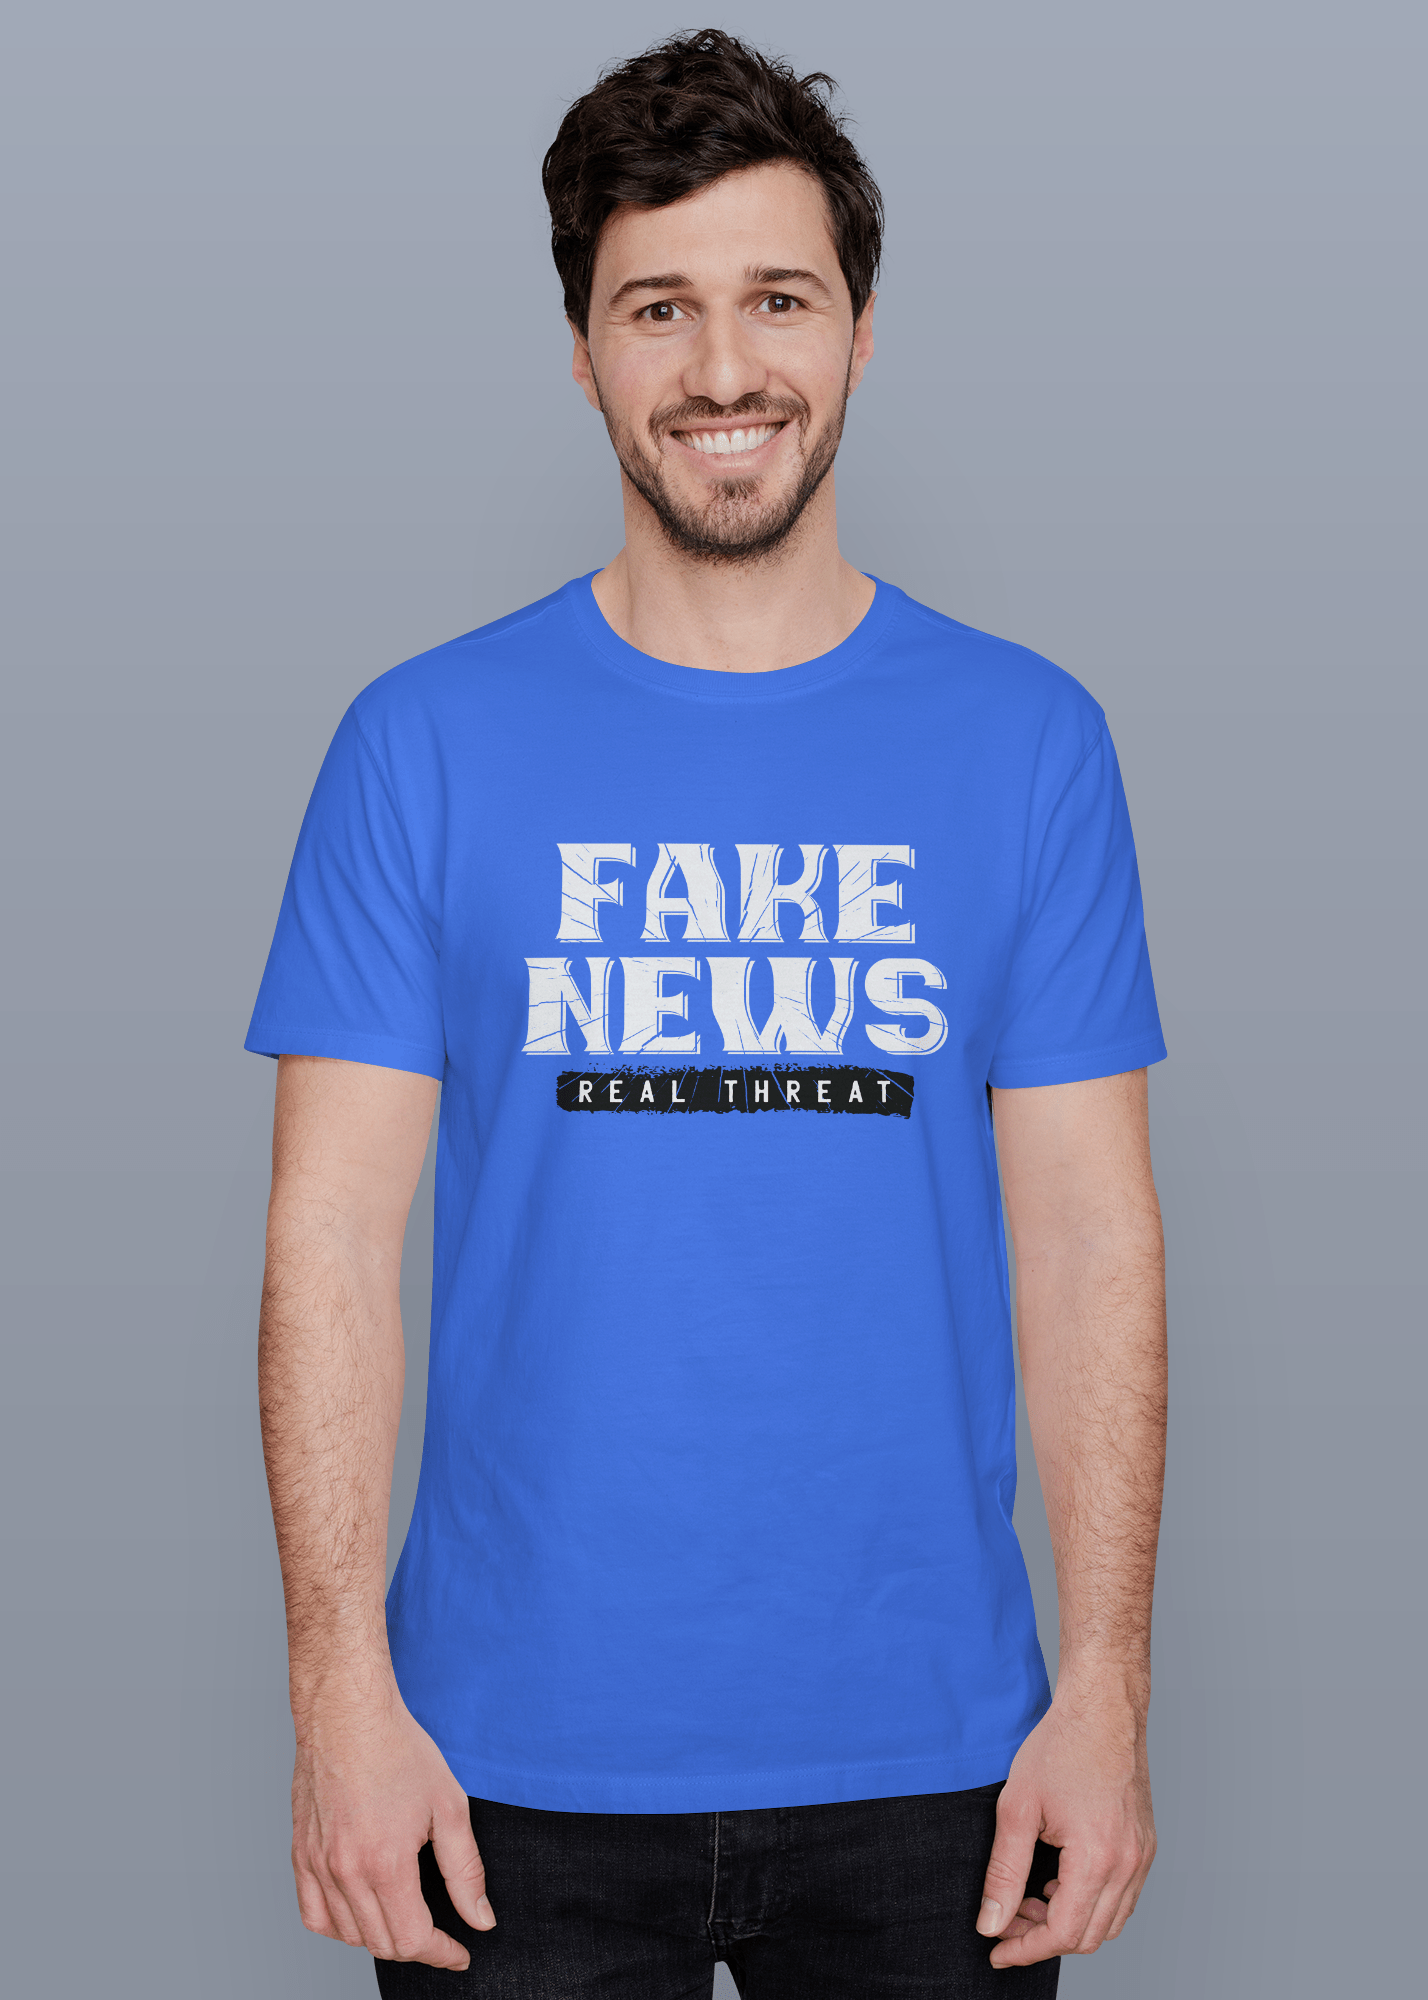 Fake News Alert Printed Half Sleeve Premium Cotton T-shirt For Men